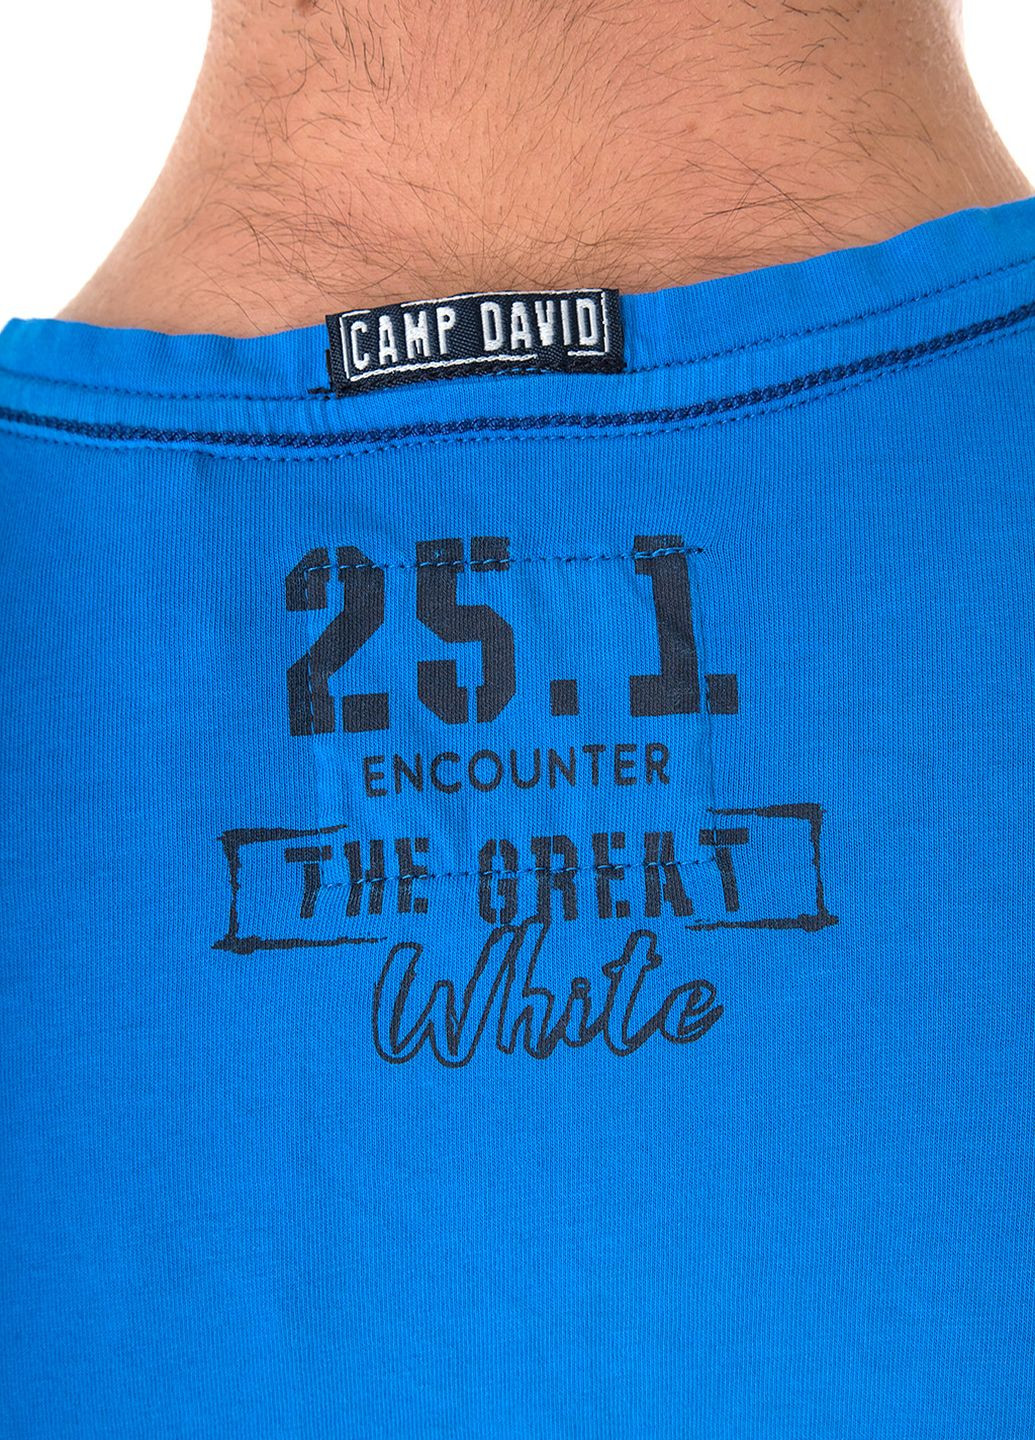 Голубая футболка Camp David